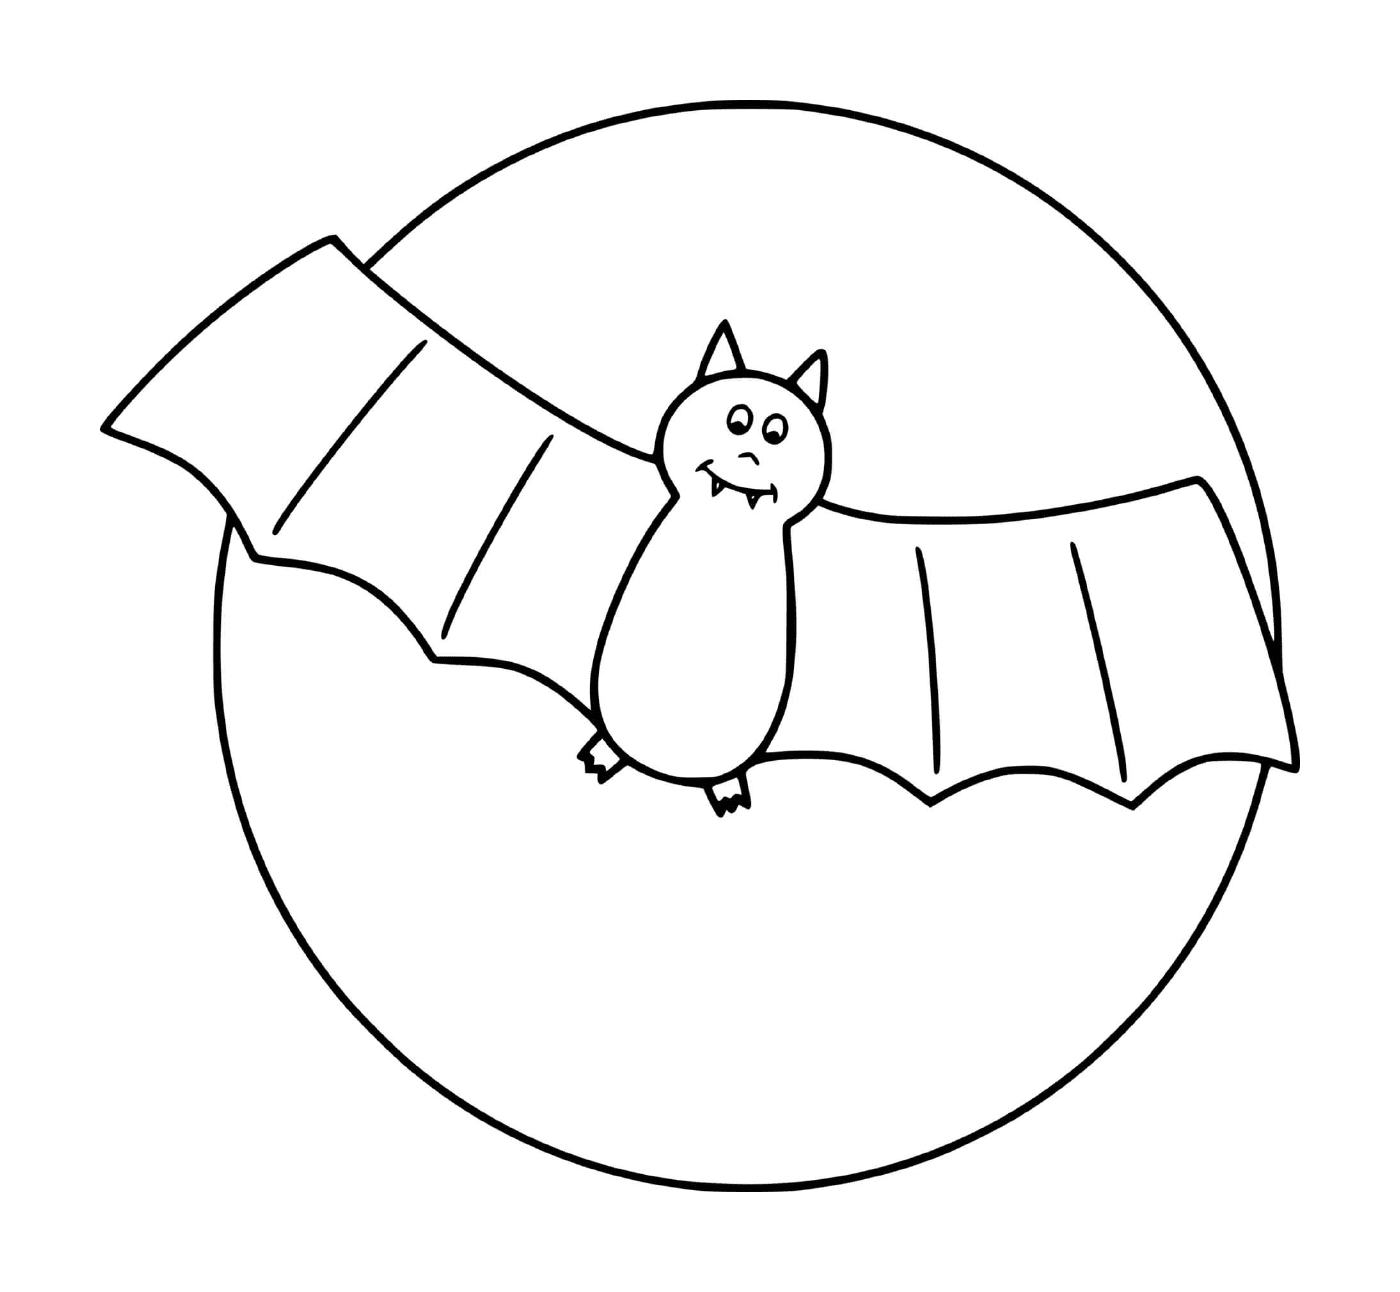  single bat in full flight with the moon 